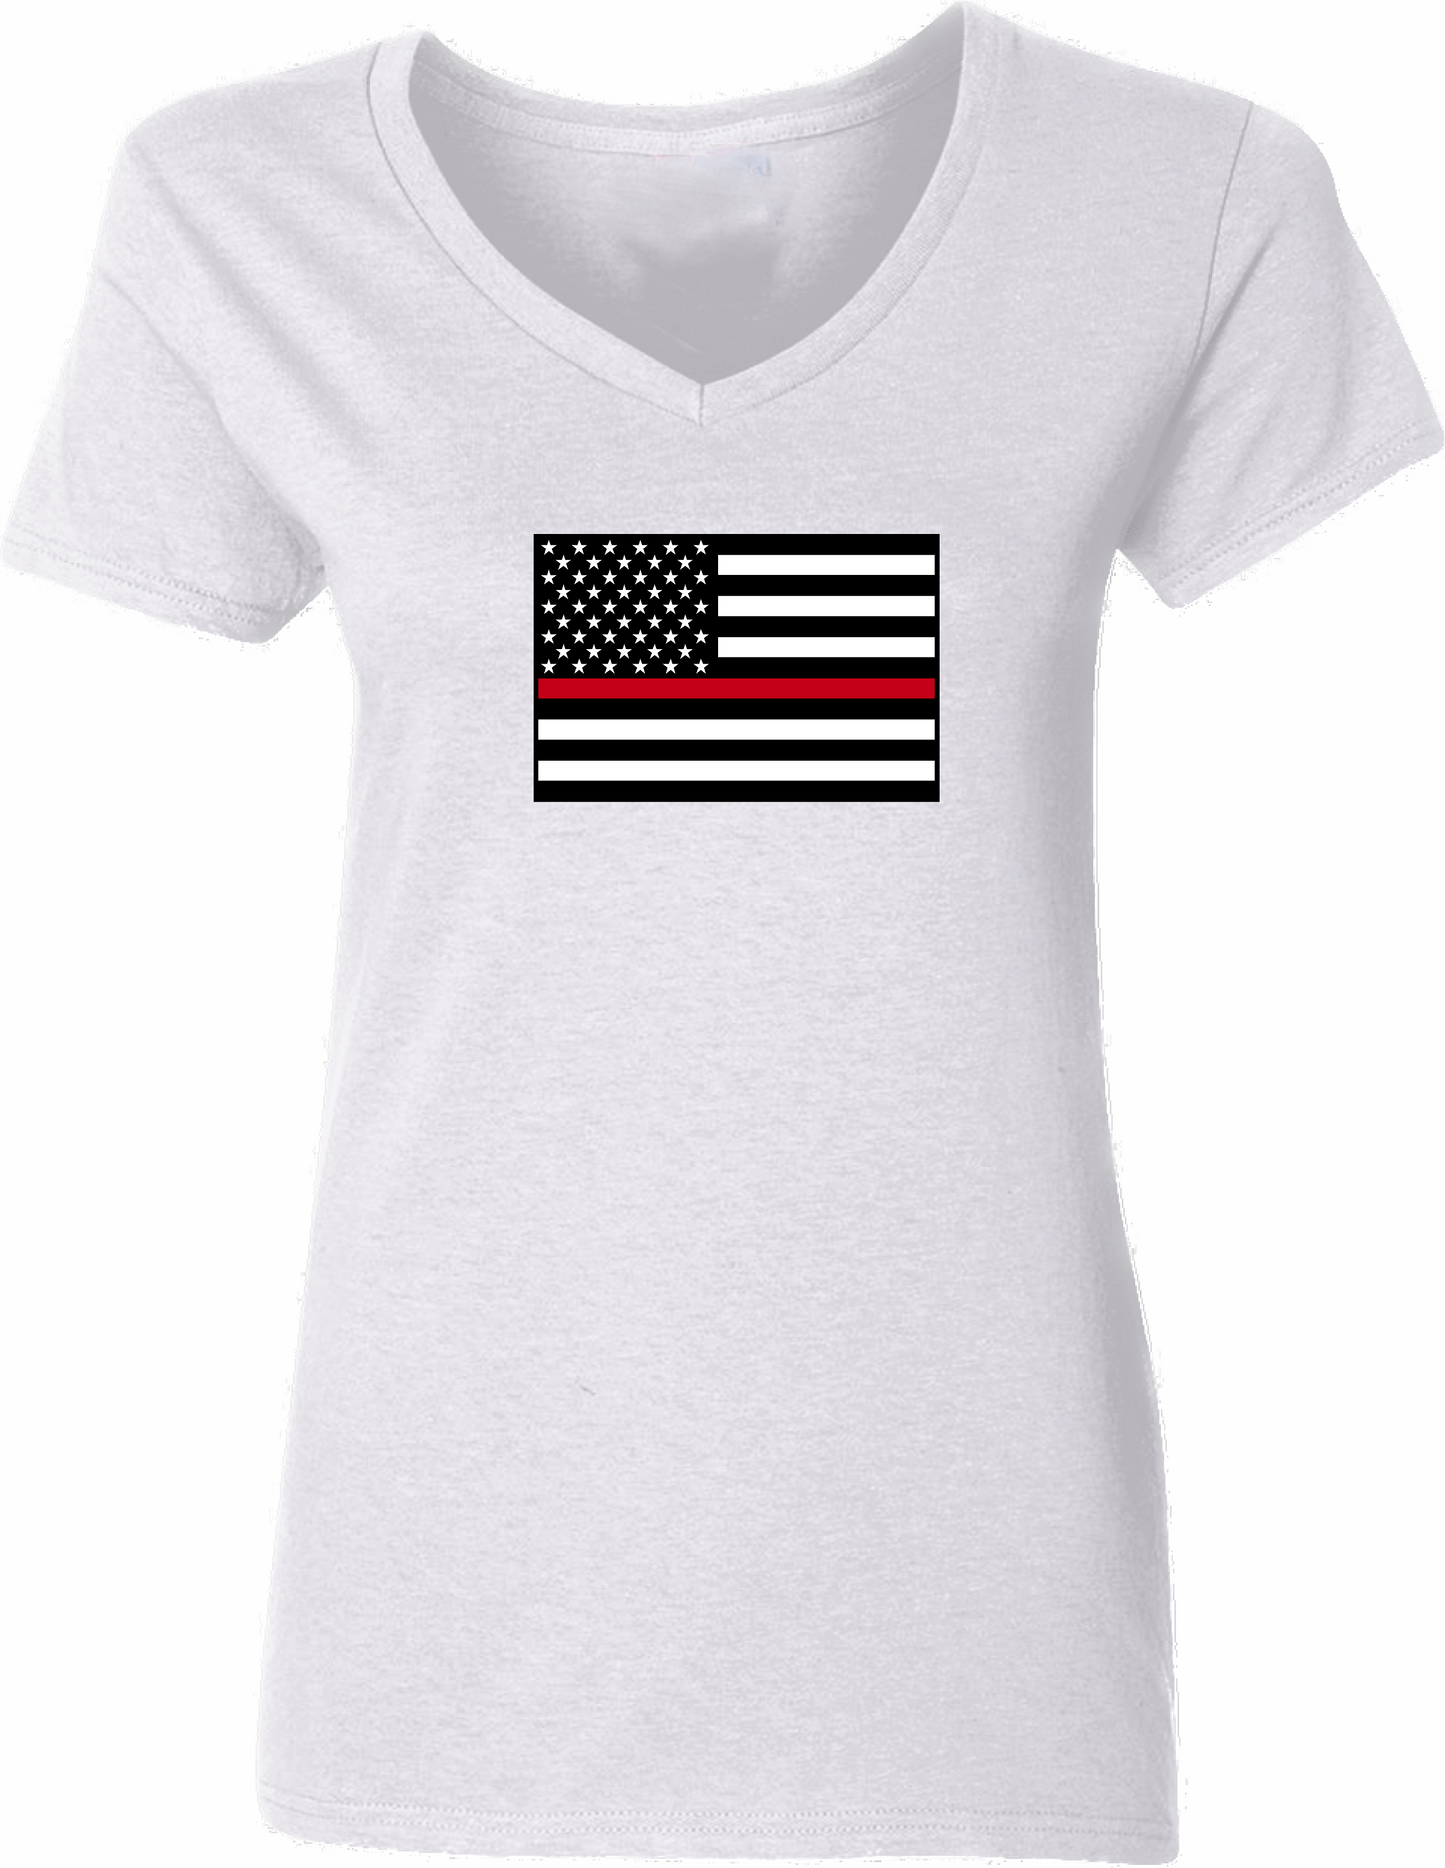 Women’s Thin Red Line American Flag V-Neck